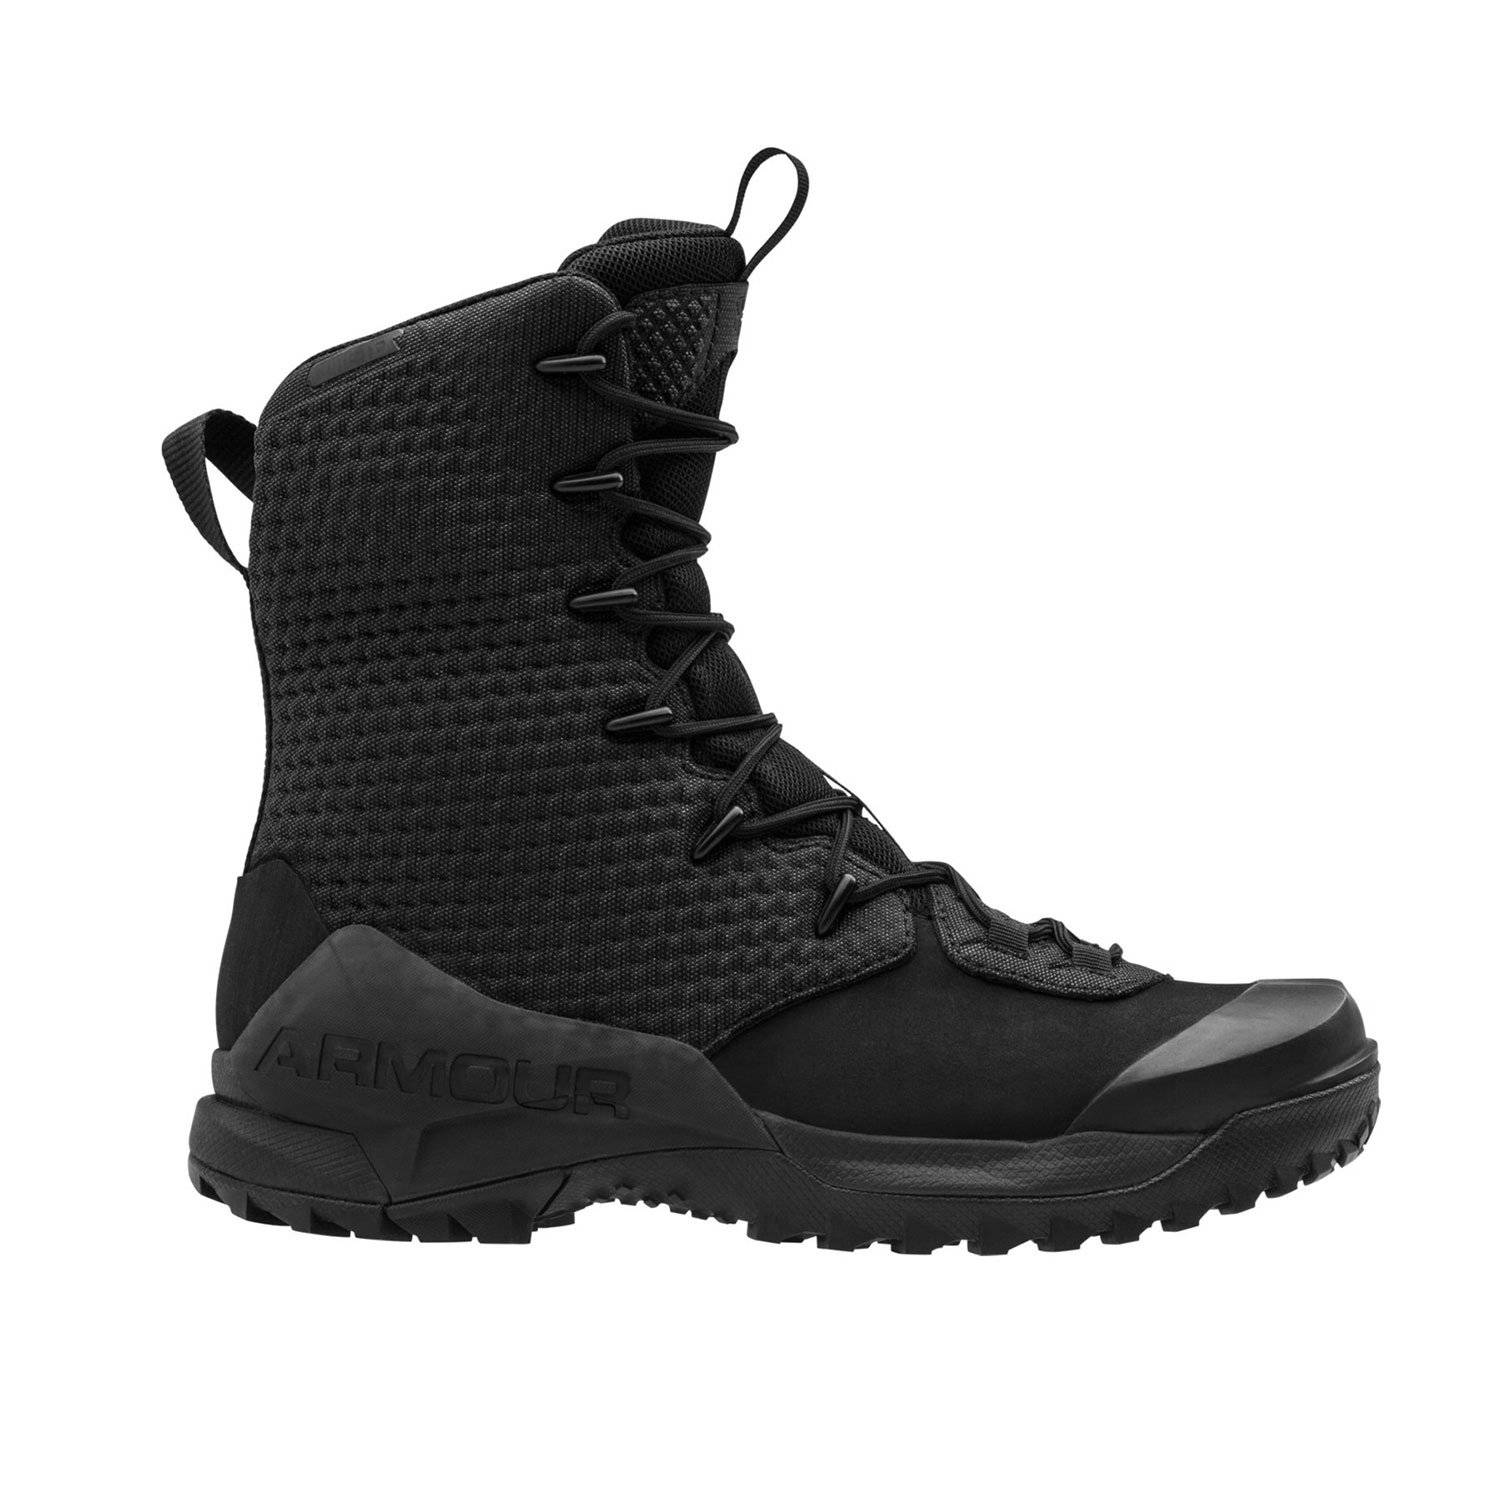 Cheap under armor waterproof boots Buy 